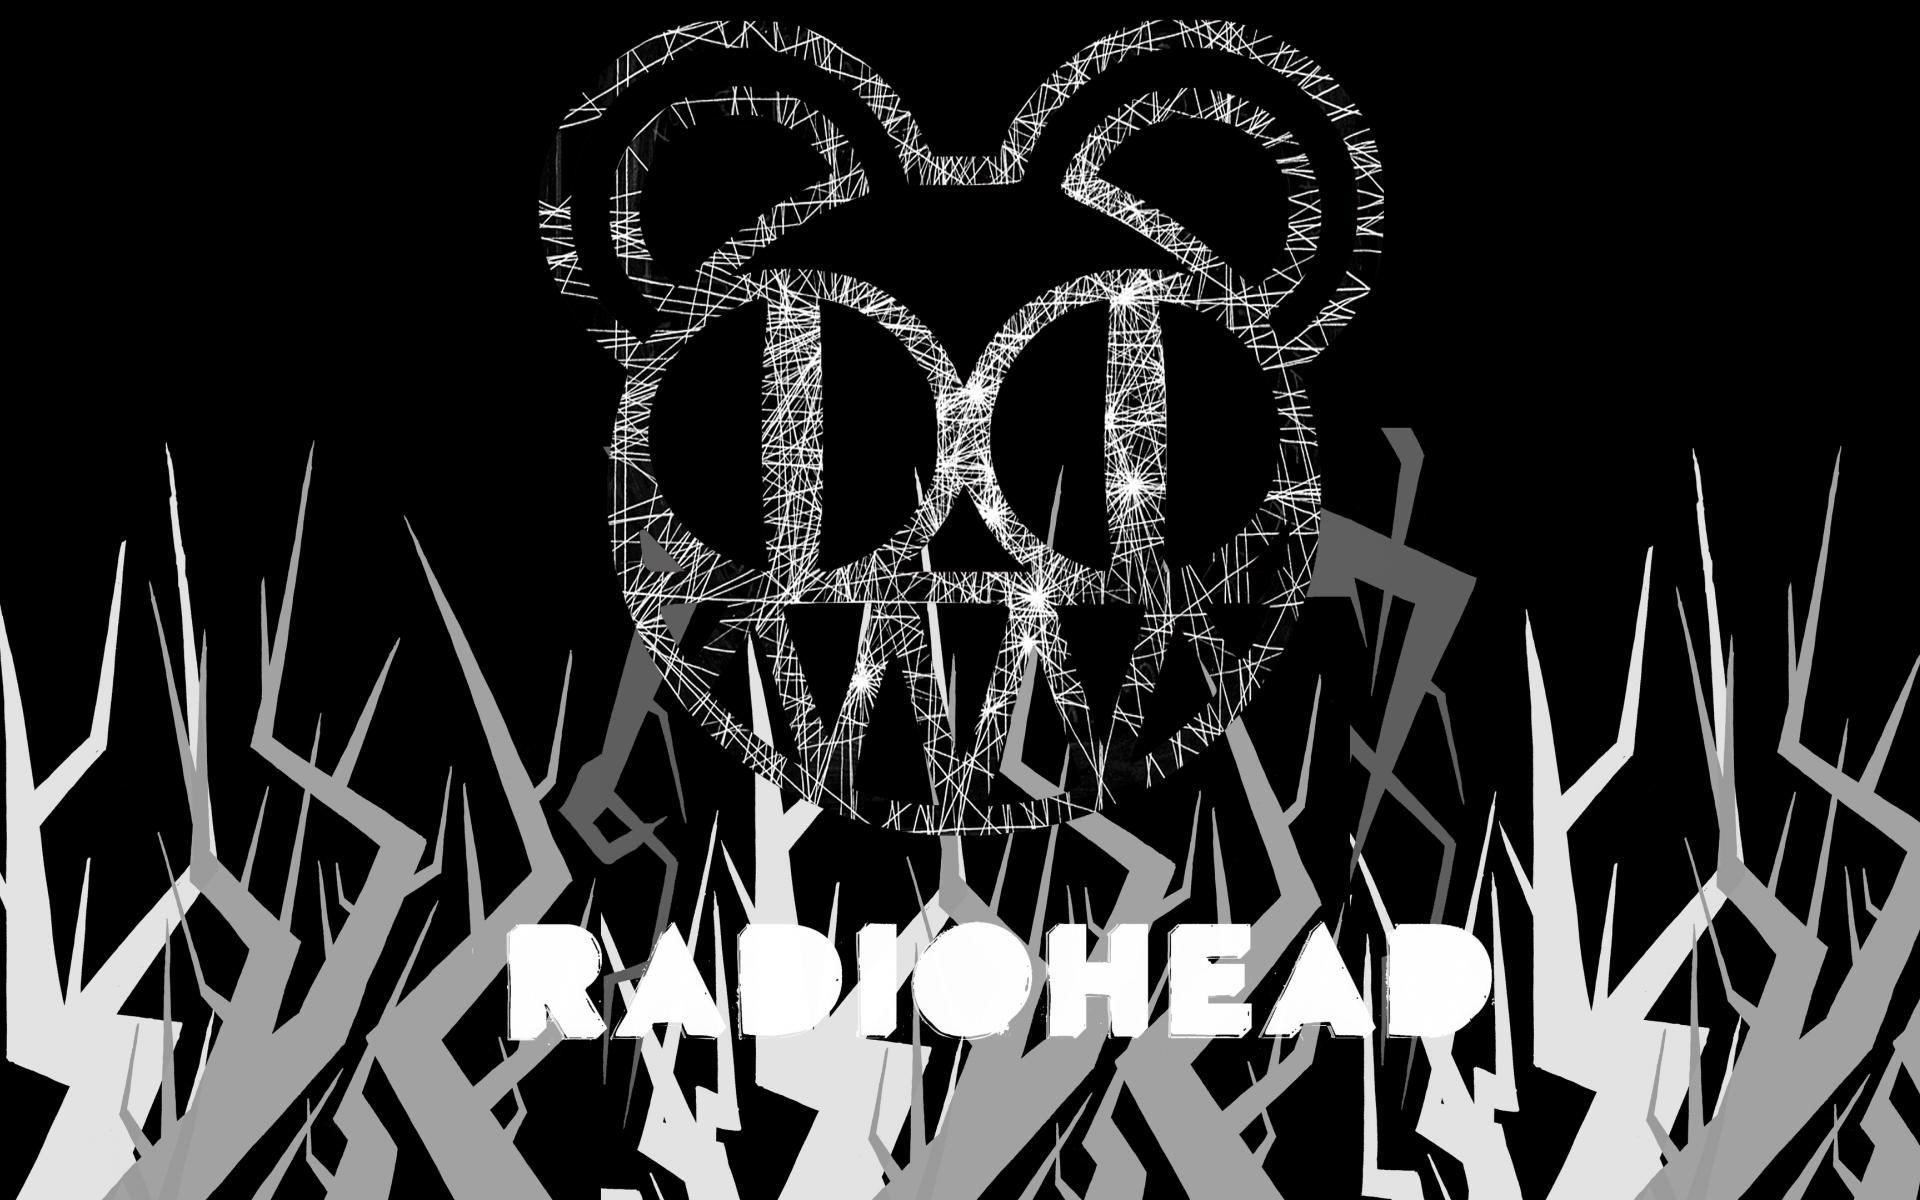 Radiohead Wallpapers Top Free Radiohead Backgrounds Wallpaperaccess